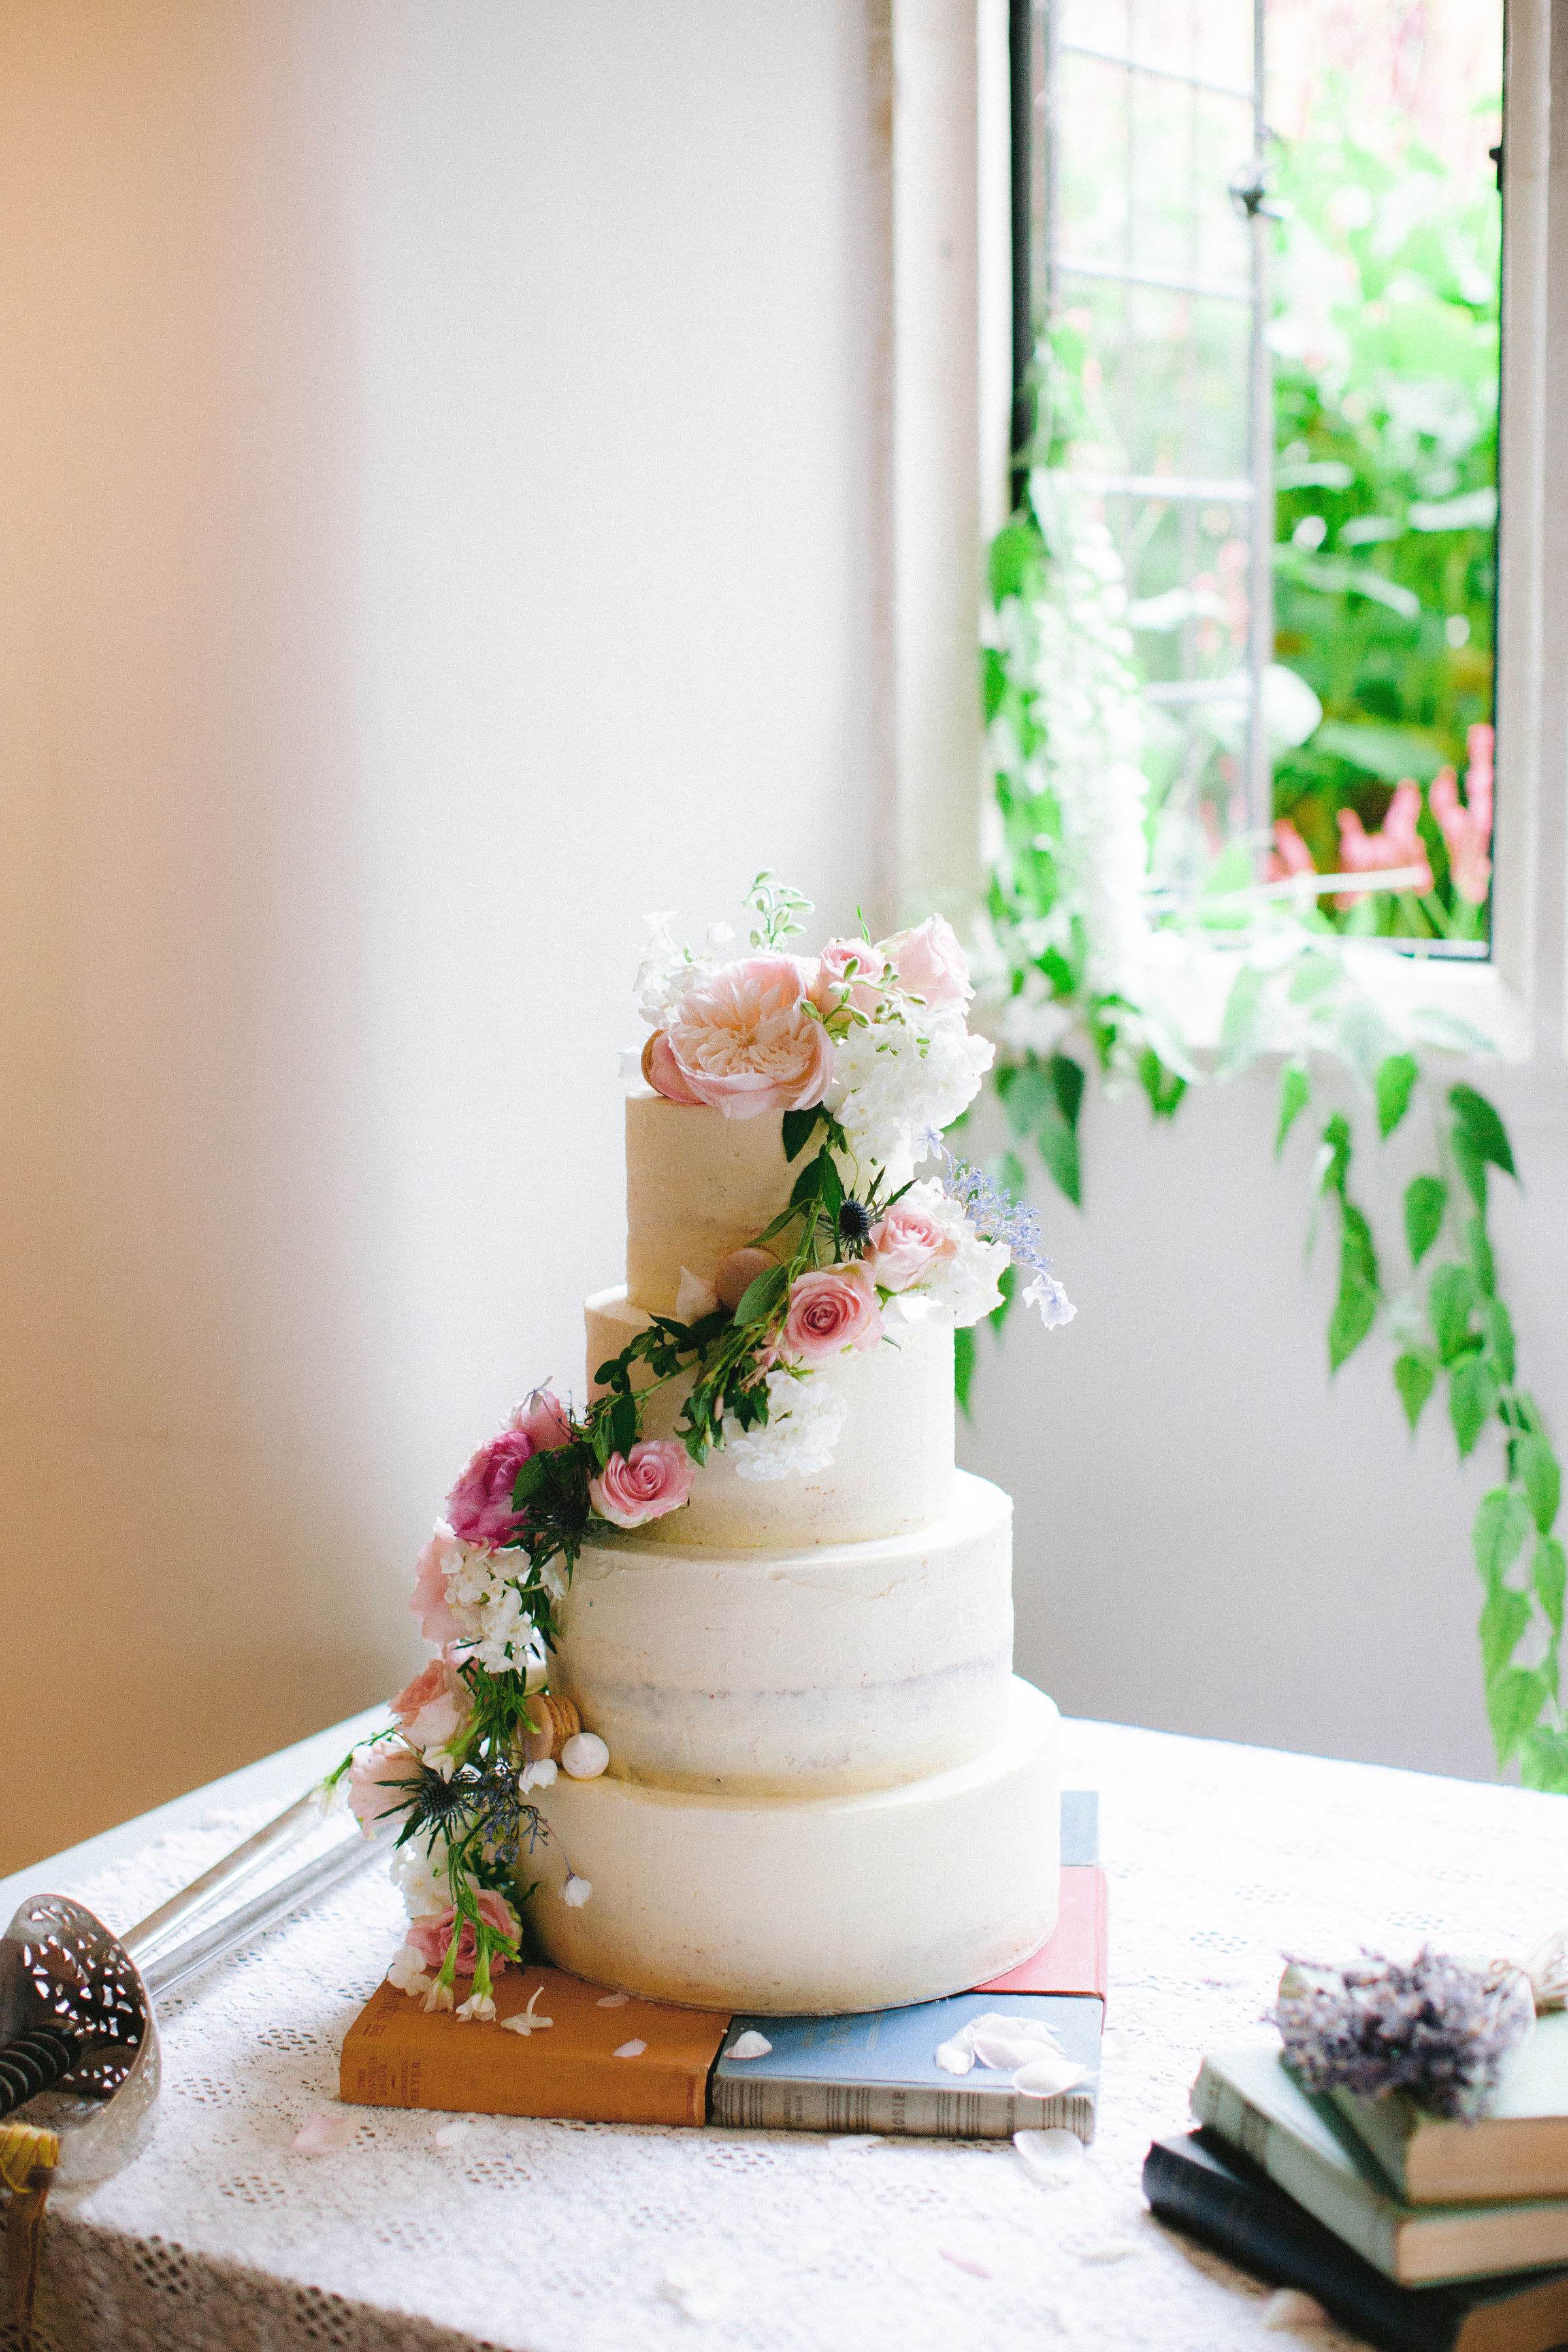 Romantic buttercream wedding cake decorated with English garden flowers | Sugar Plum Bakes